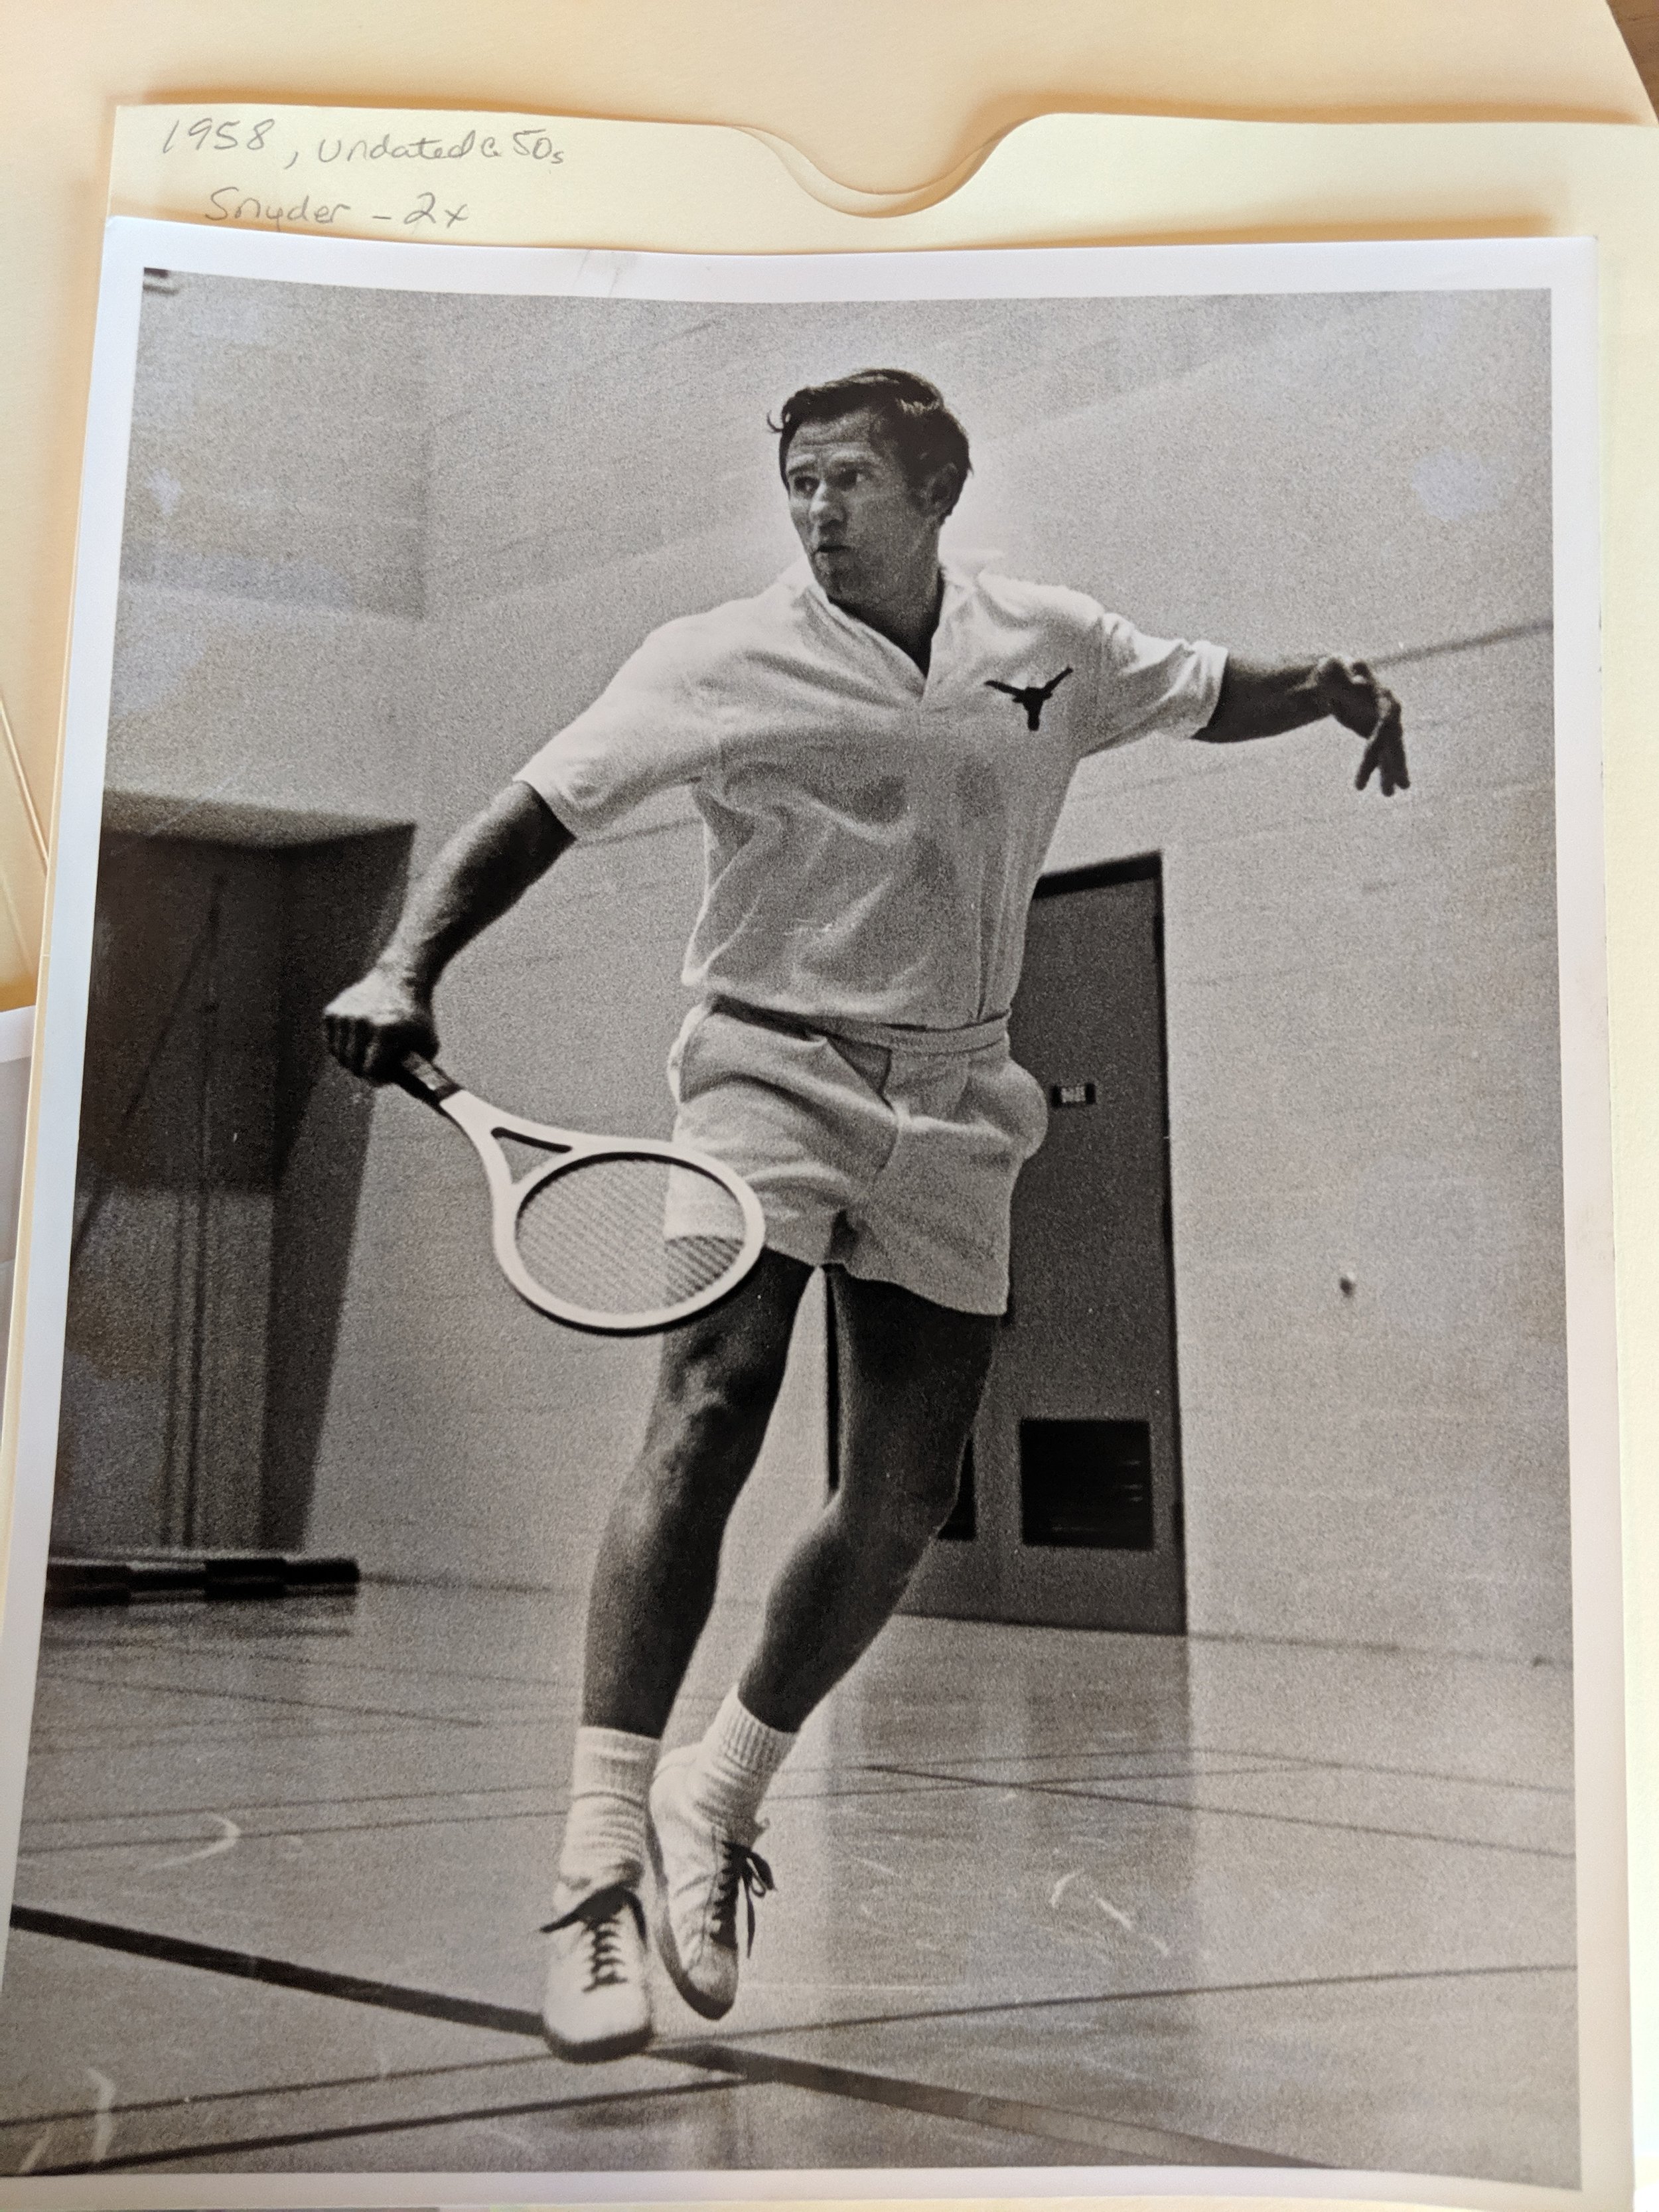 1958 tennis snyder as player (3).jpg